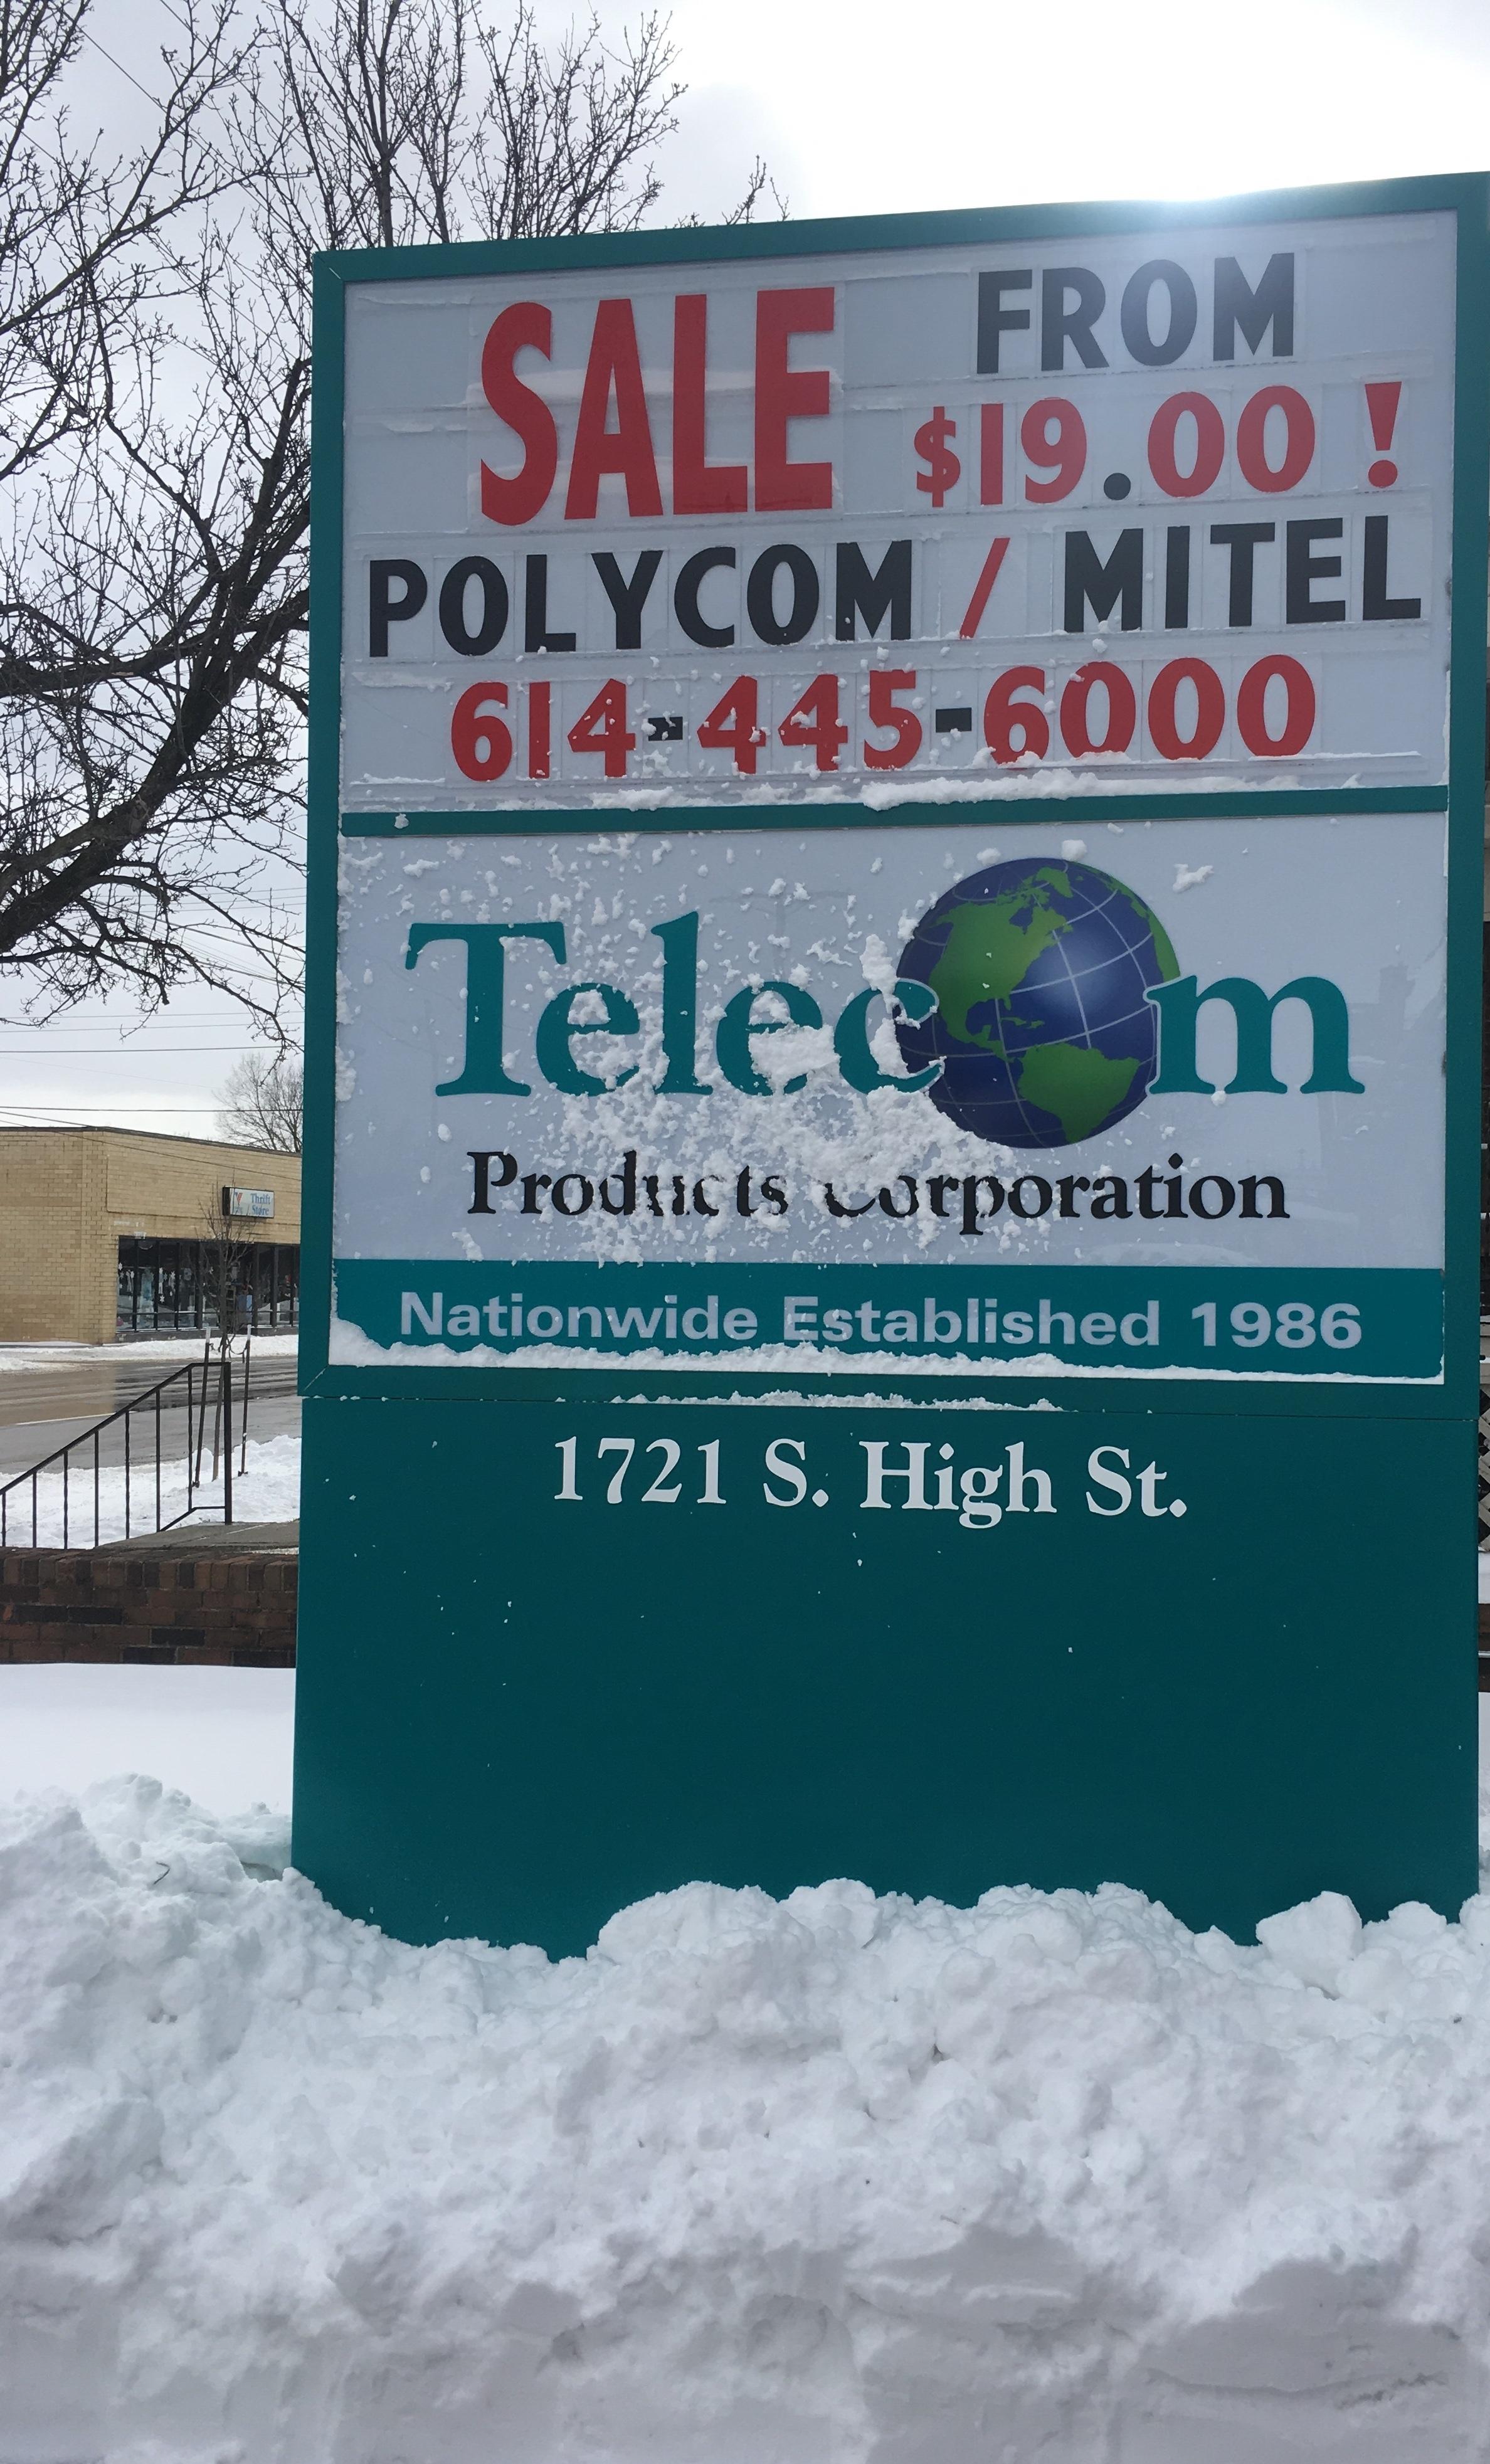 Telecom Products Corporation Photo